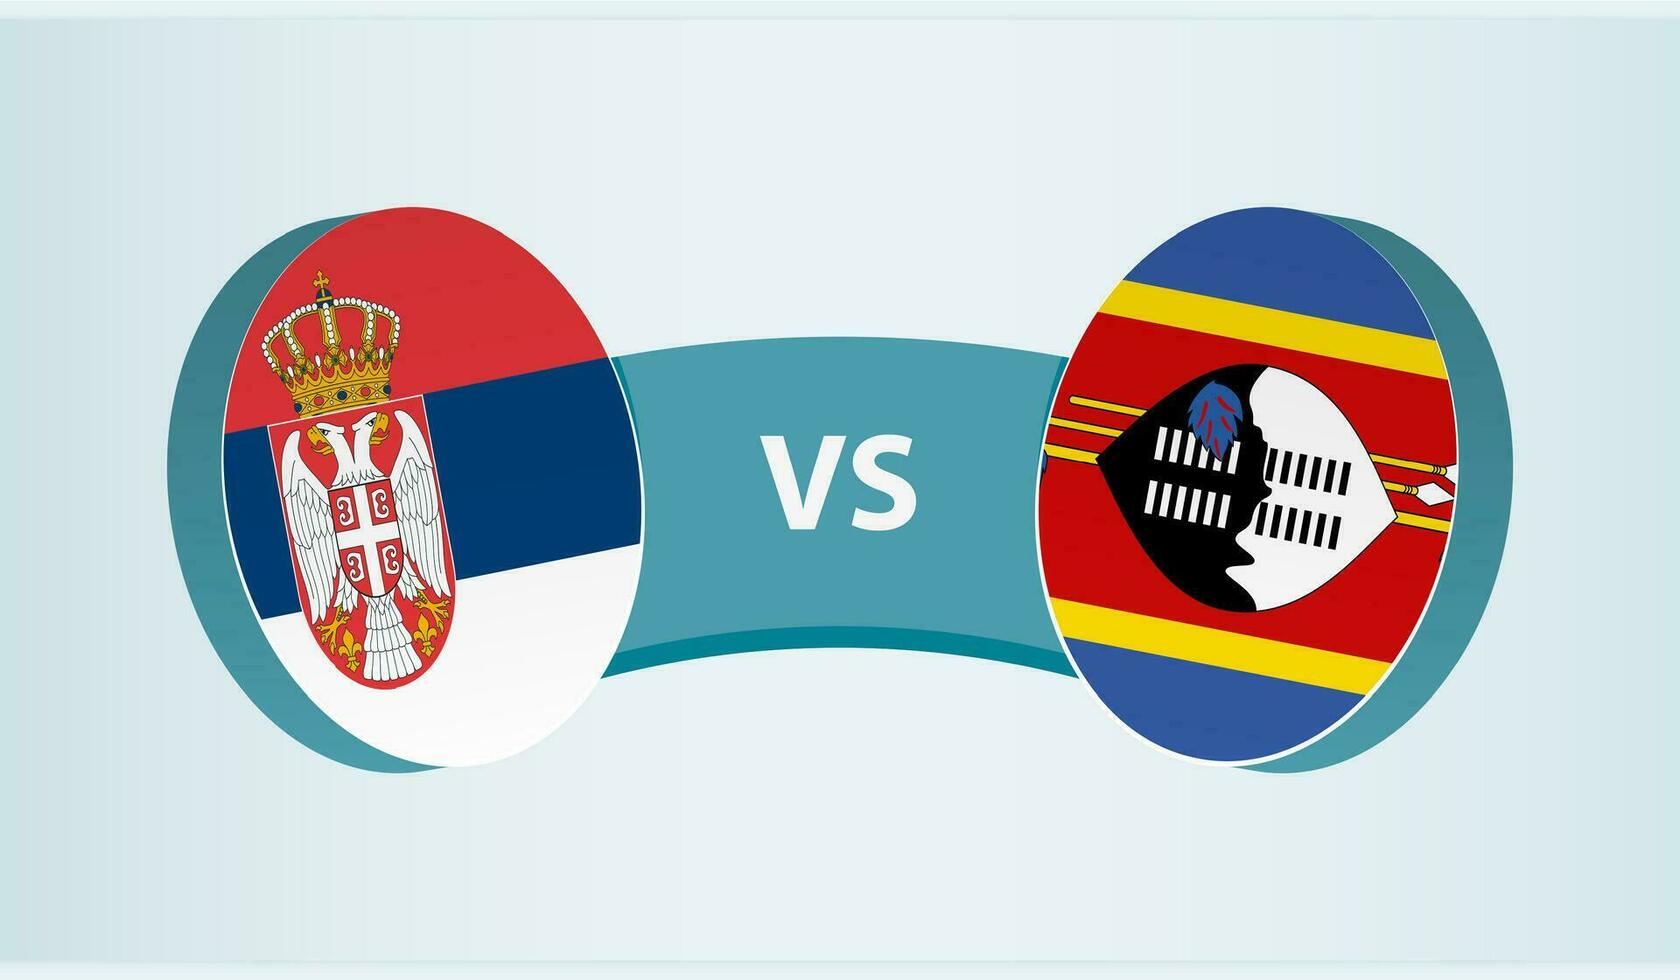 serbia mot swaziland, team sporter konkurrens begrepp. vektor